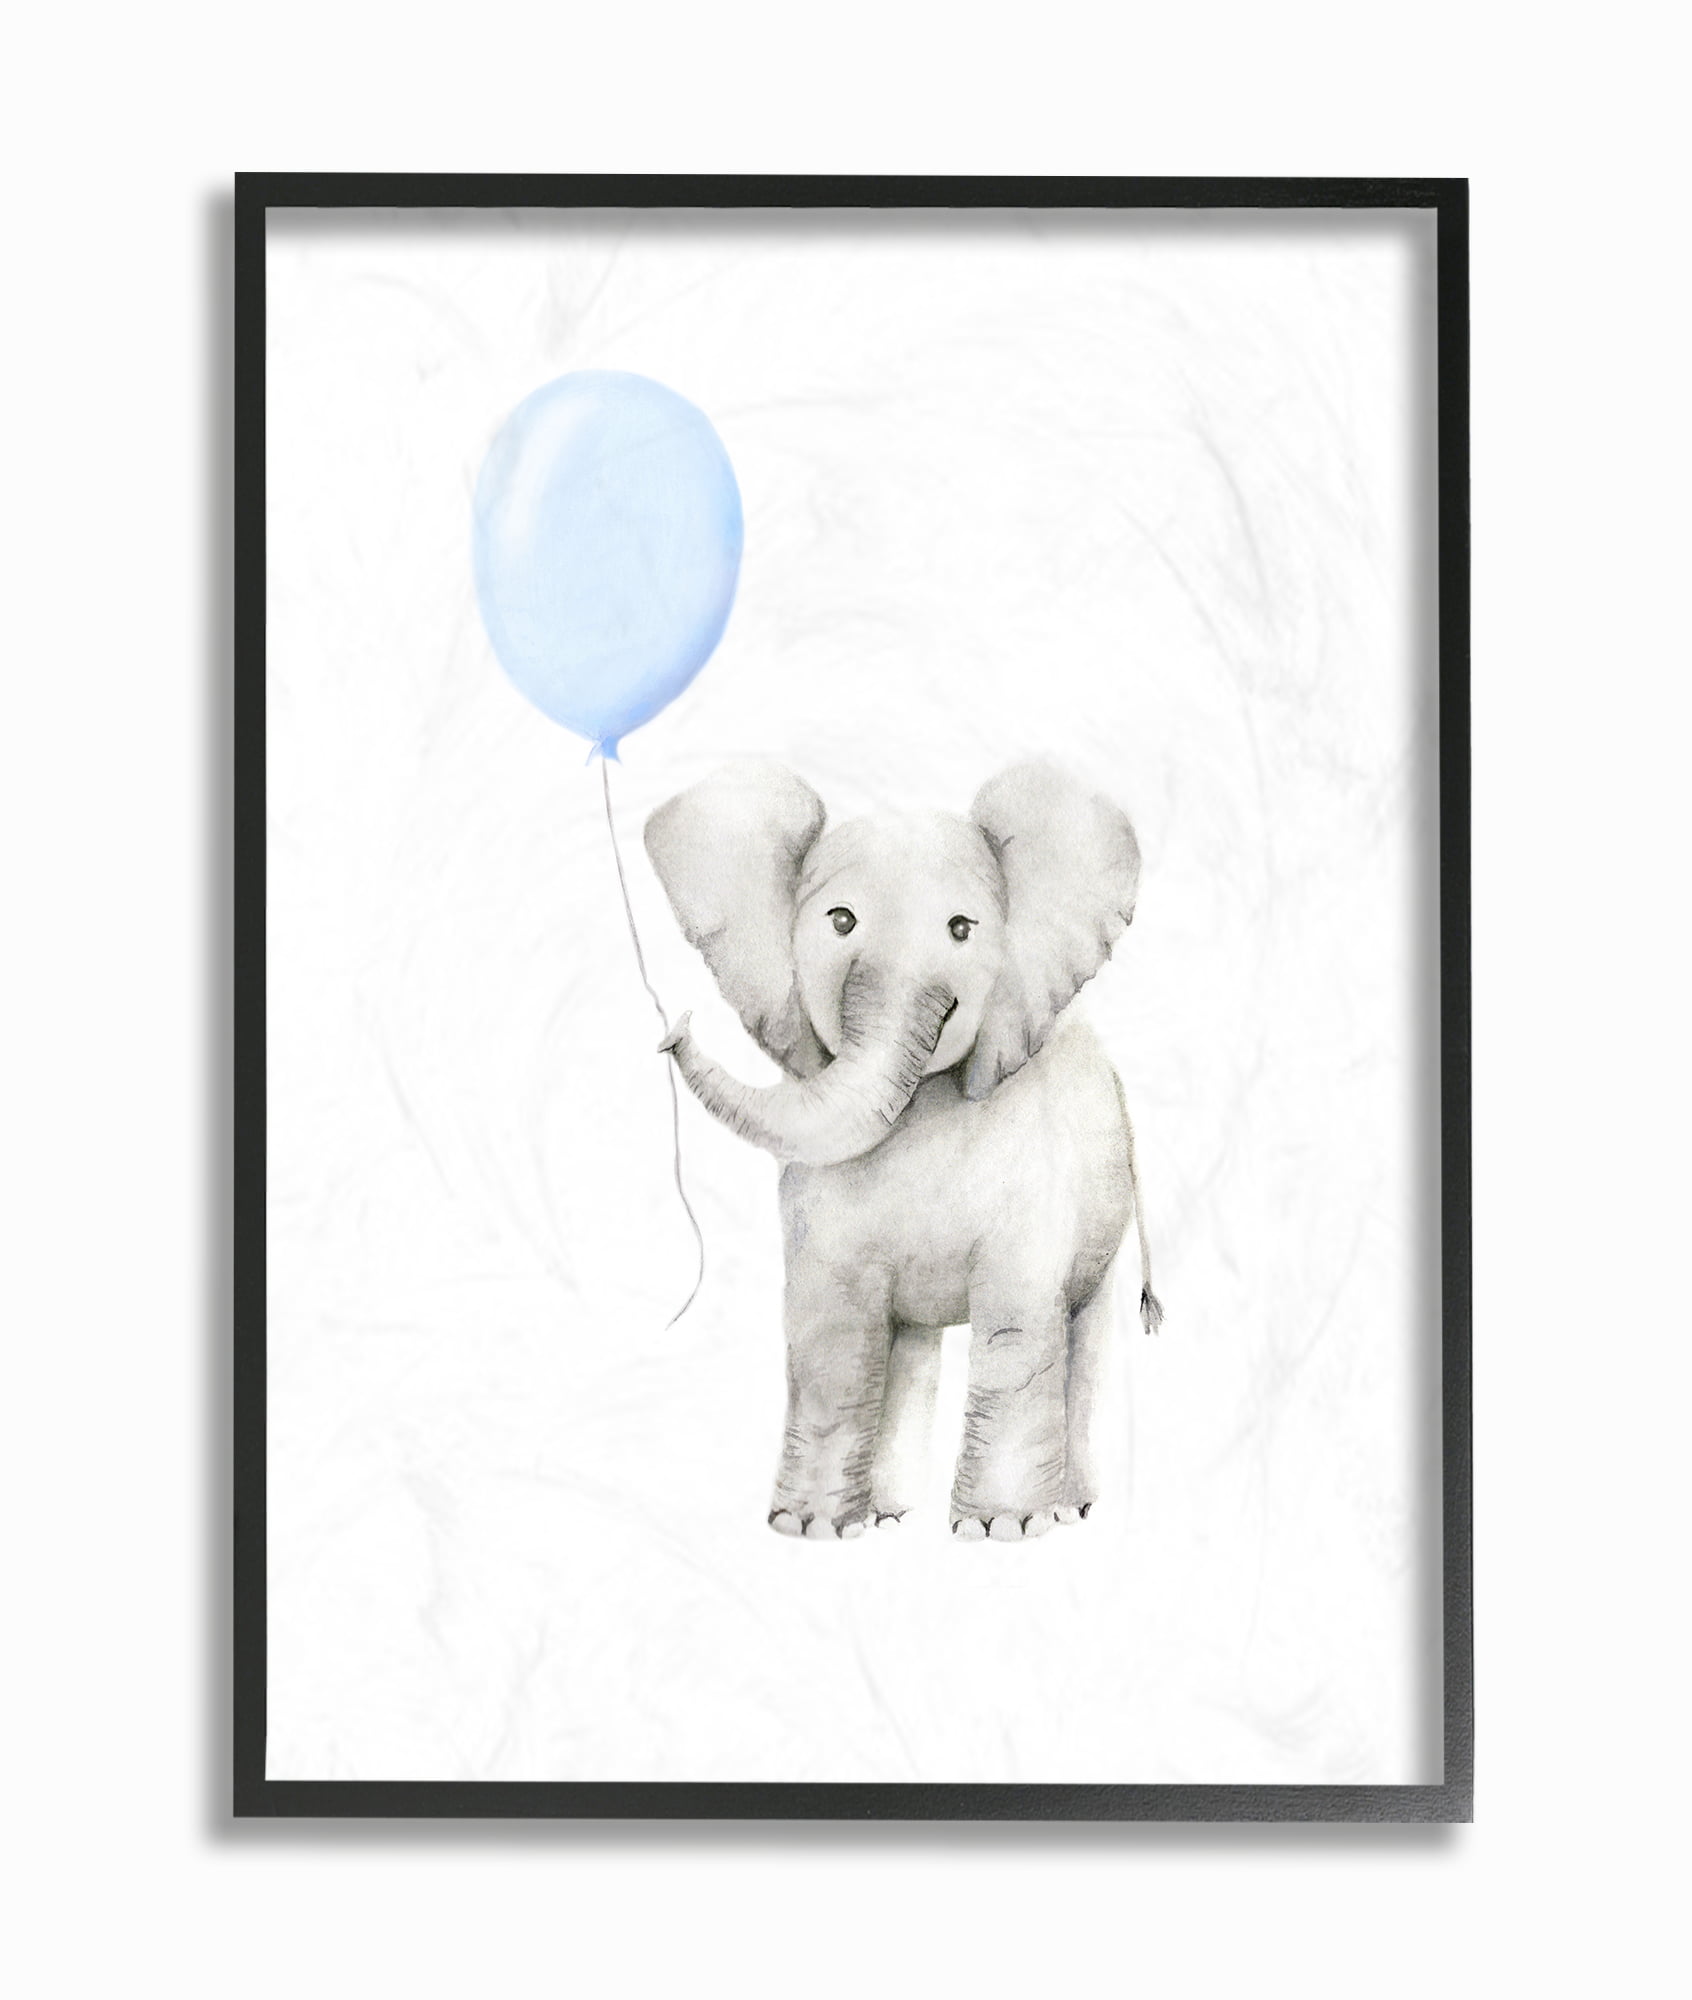 11 x 14 Stupell Industries Baby Elephant with Blue Balloon Grey Framed Wall Art Design by Artist Daphne Polselli